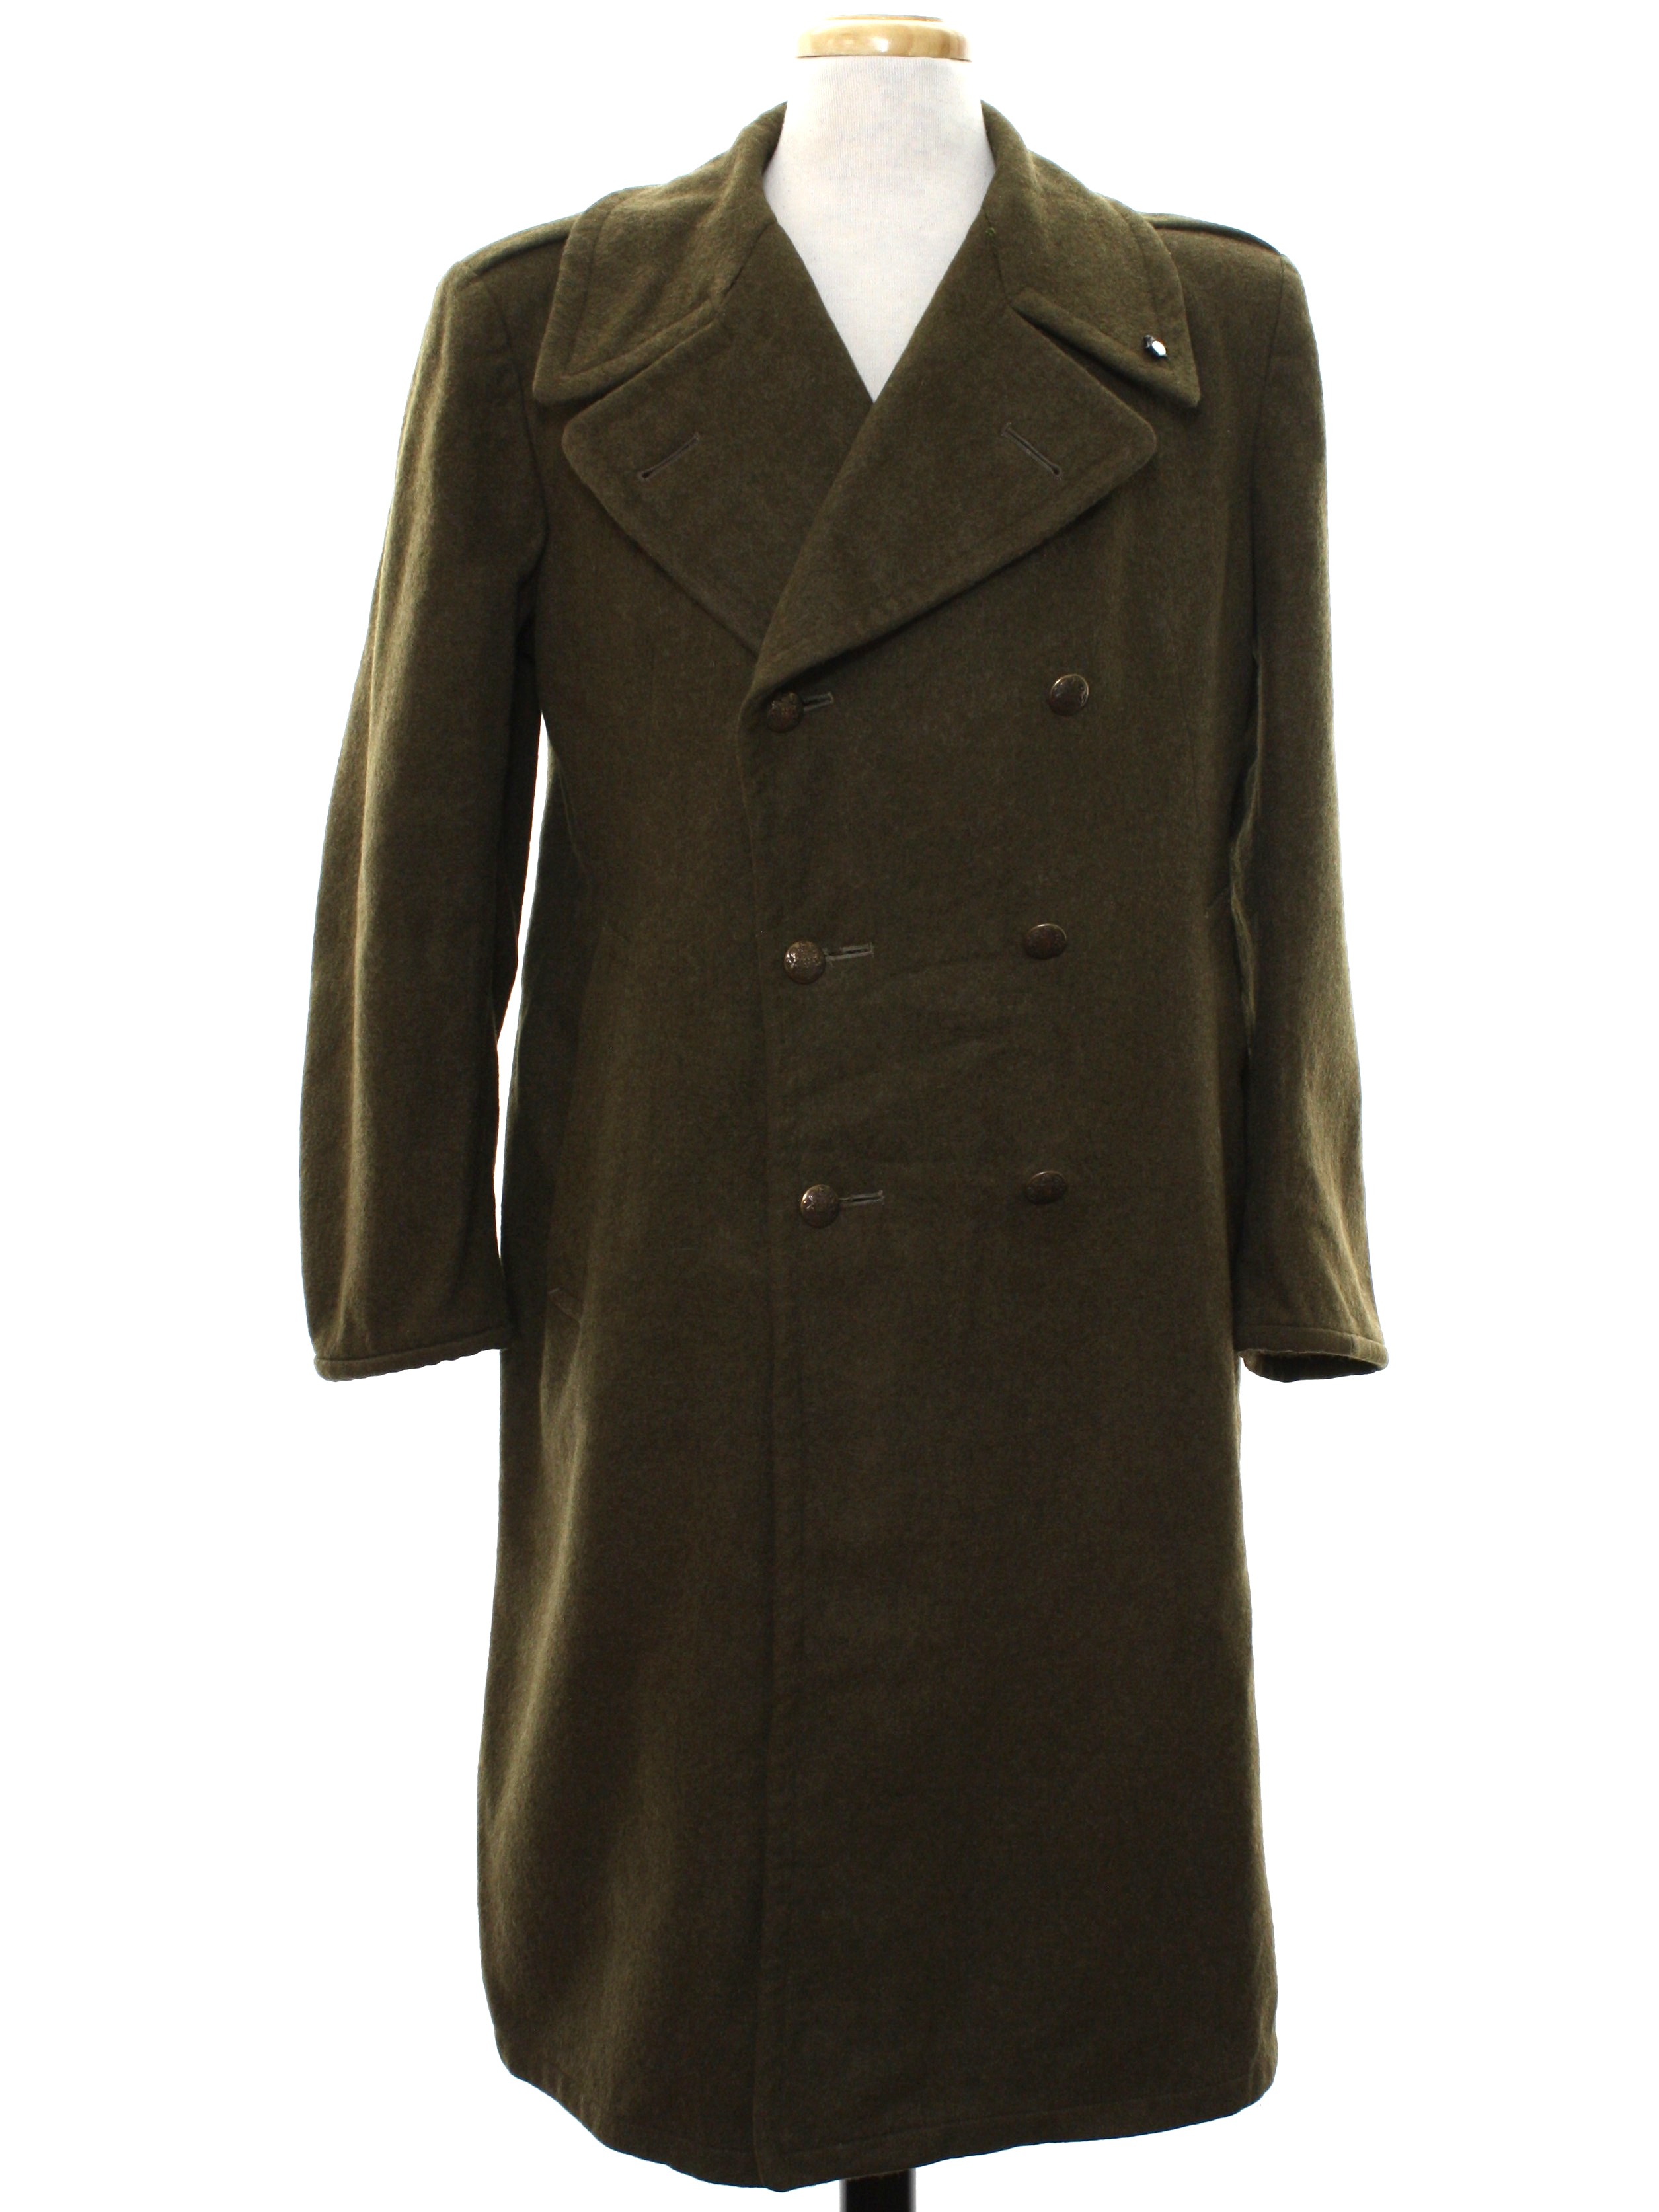 Thirties Vestra Jacket: Late 30s or Early 40s -Vestra- Mens khaki green ...